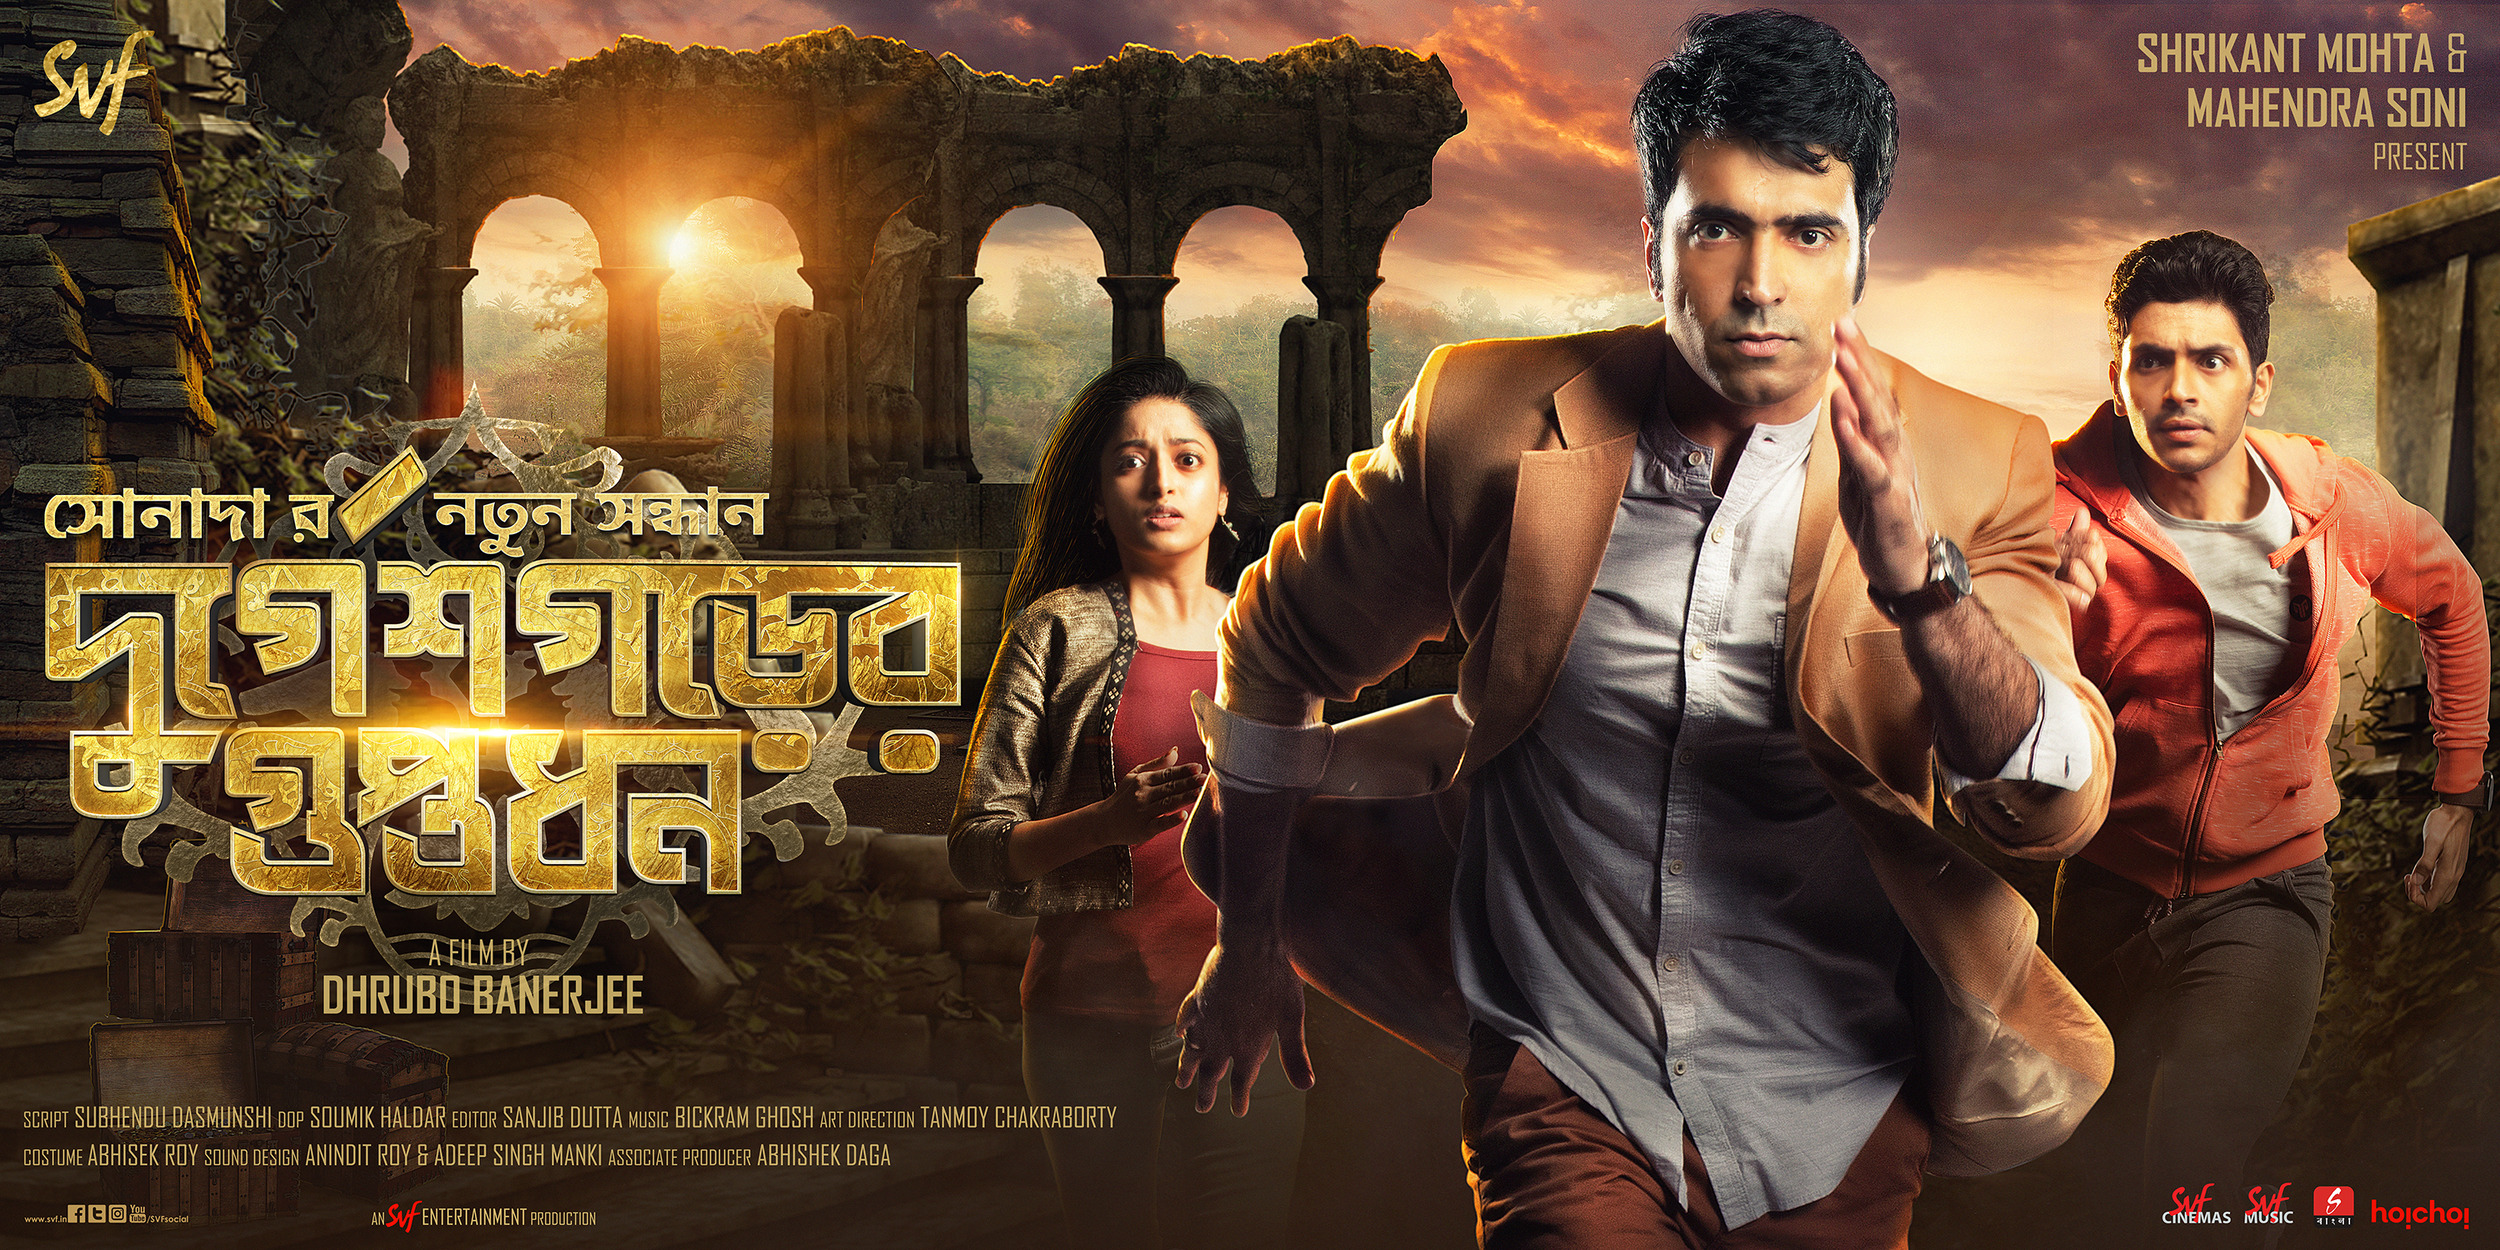 Mega Sized Movie Poster Image for Durgeshgorer Guptodhon (#1 of 3)